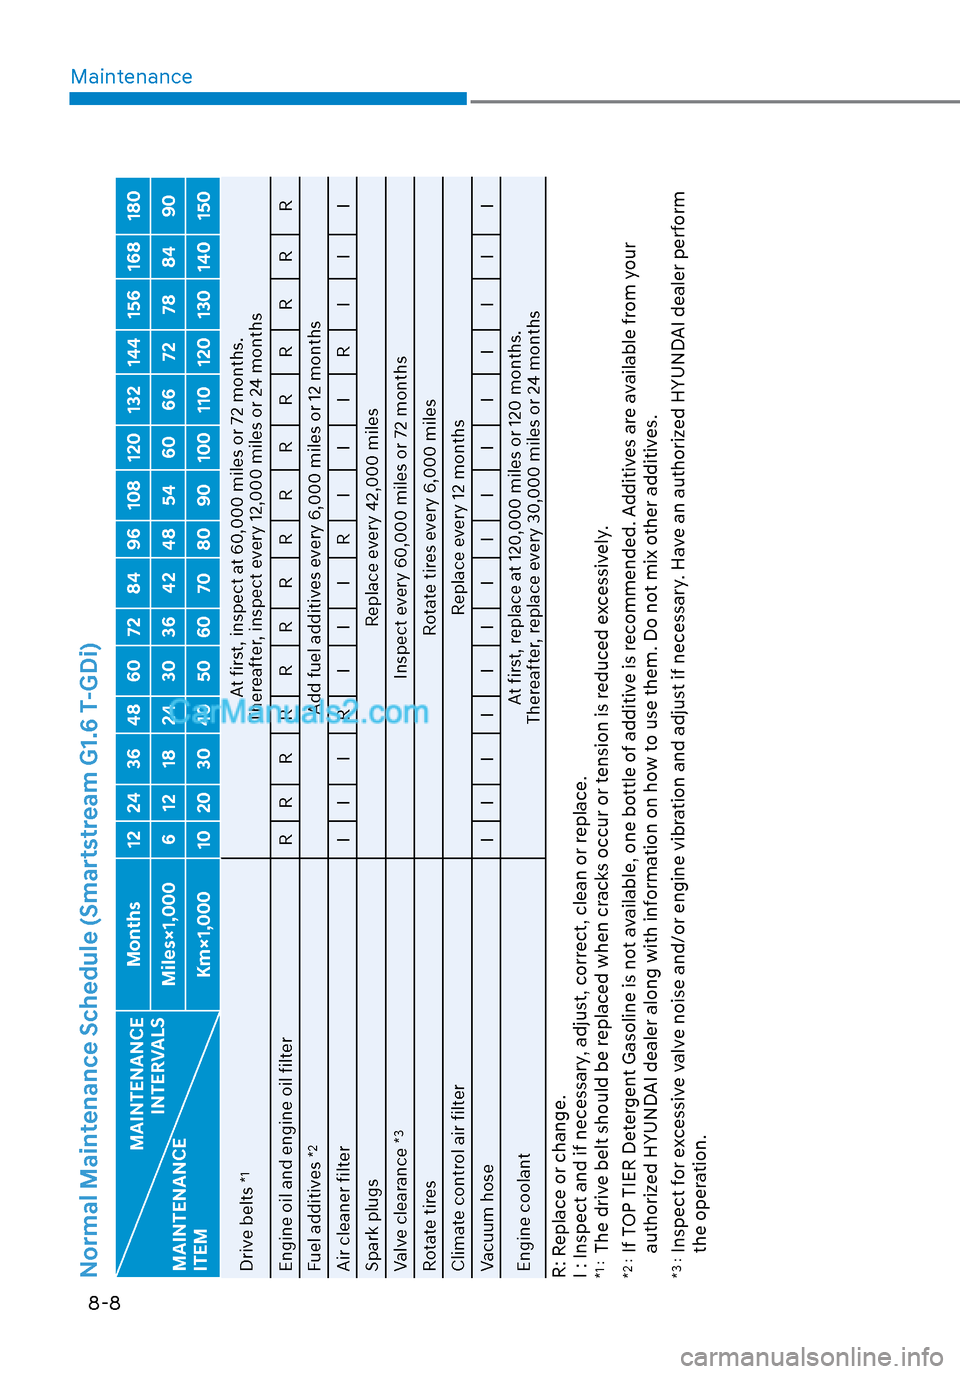 Hyundai Sonata 2020 User Guide Maintenance8-8
Normal Maintenance Schedule (Smartstream G1.6 T-GDi)
MAINTENANCE  INTERVALS
MAINTENANCE 
ITEM Months 12 24 36 48 60 72 84 96 108 120 132 144 156 168 180
Miles×1,000 6 12 18 24 30 36 42